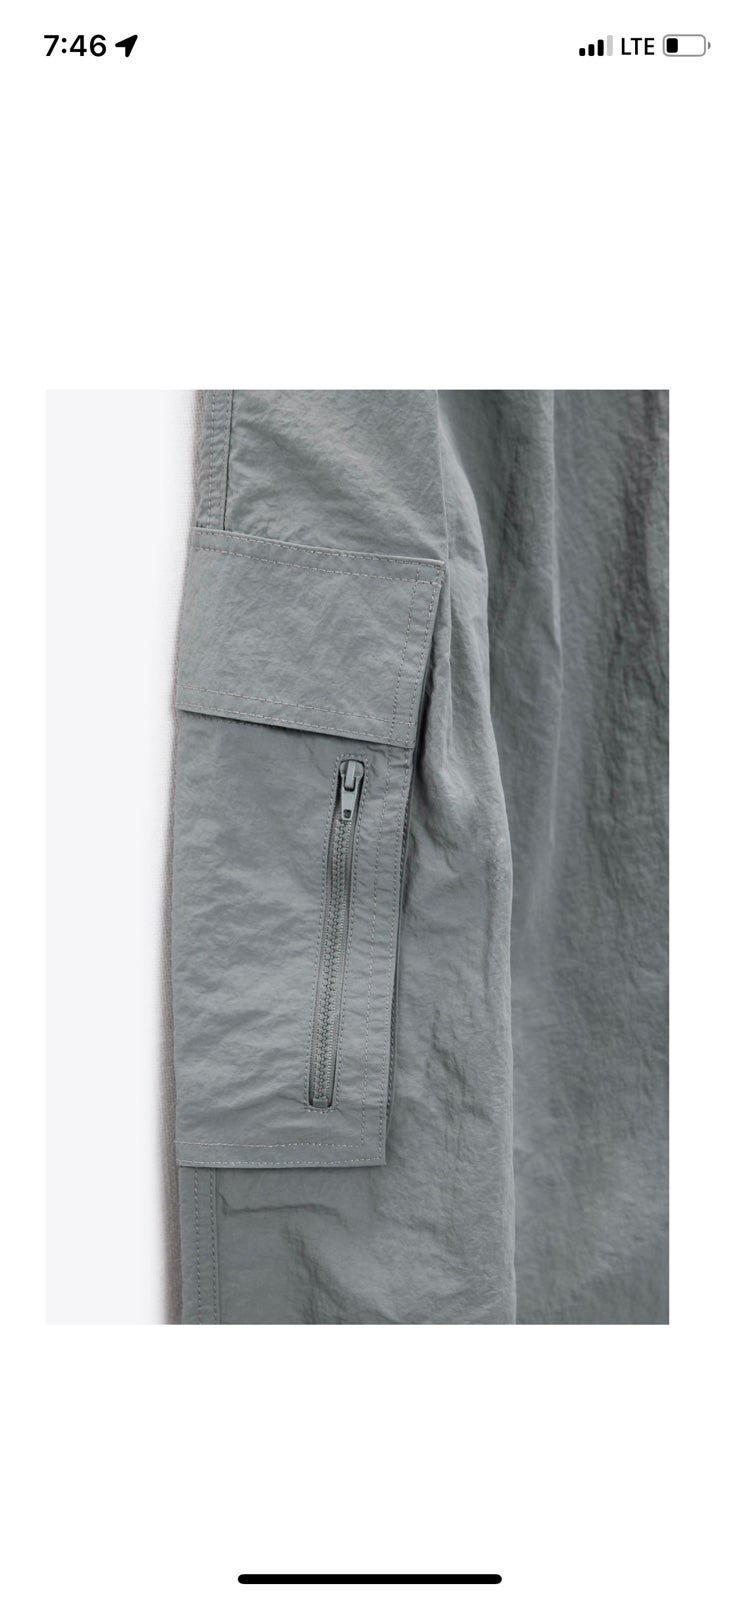 Simple NWT Zara 2 pieces track suit match nylon kangaroo jacket + cargo pants blue/gray L70cgAsyV no tax